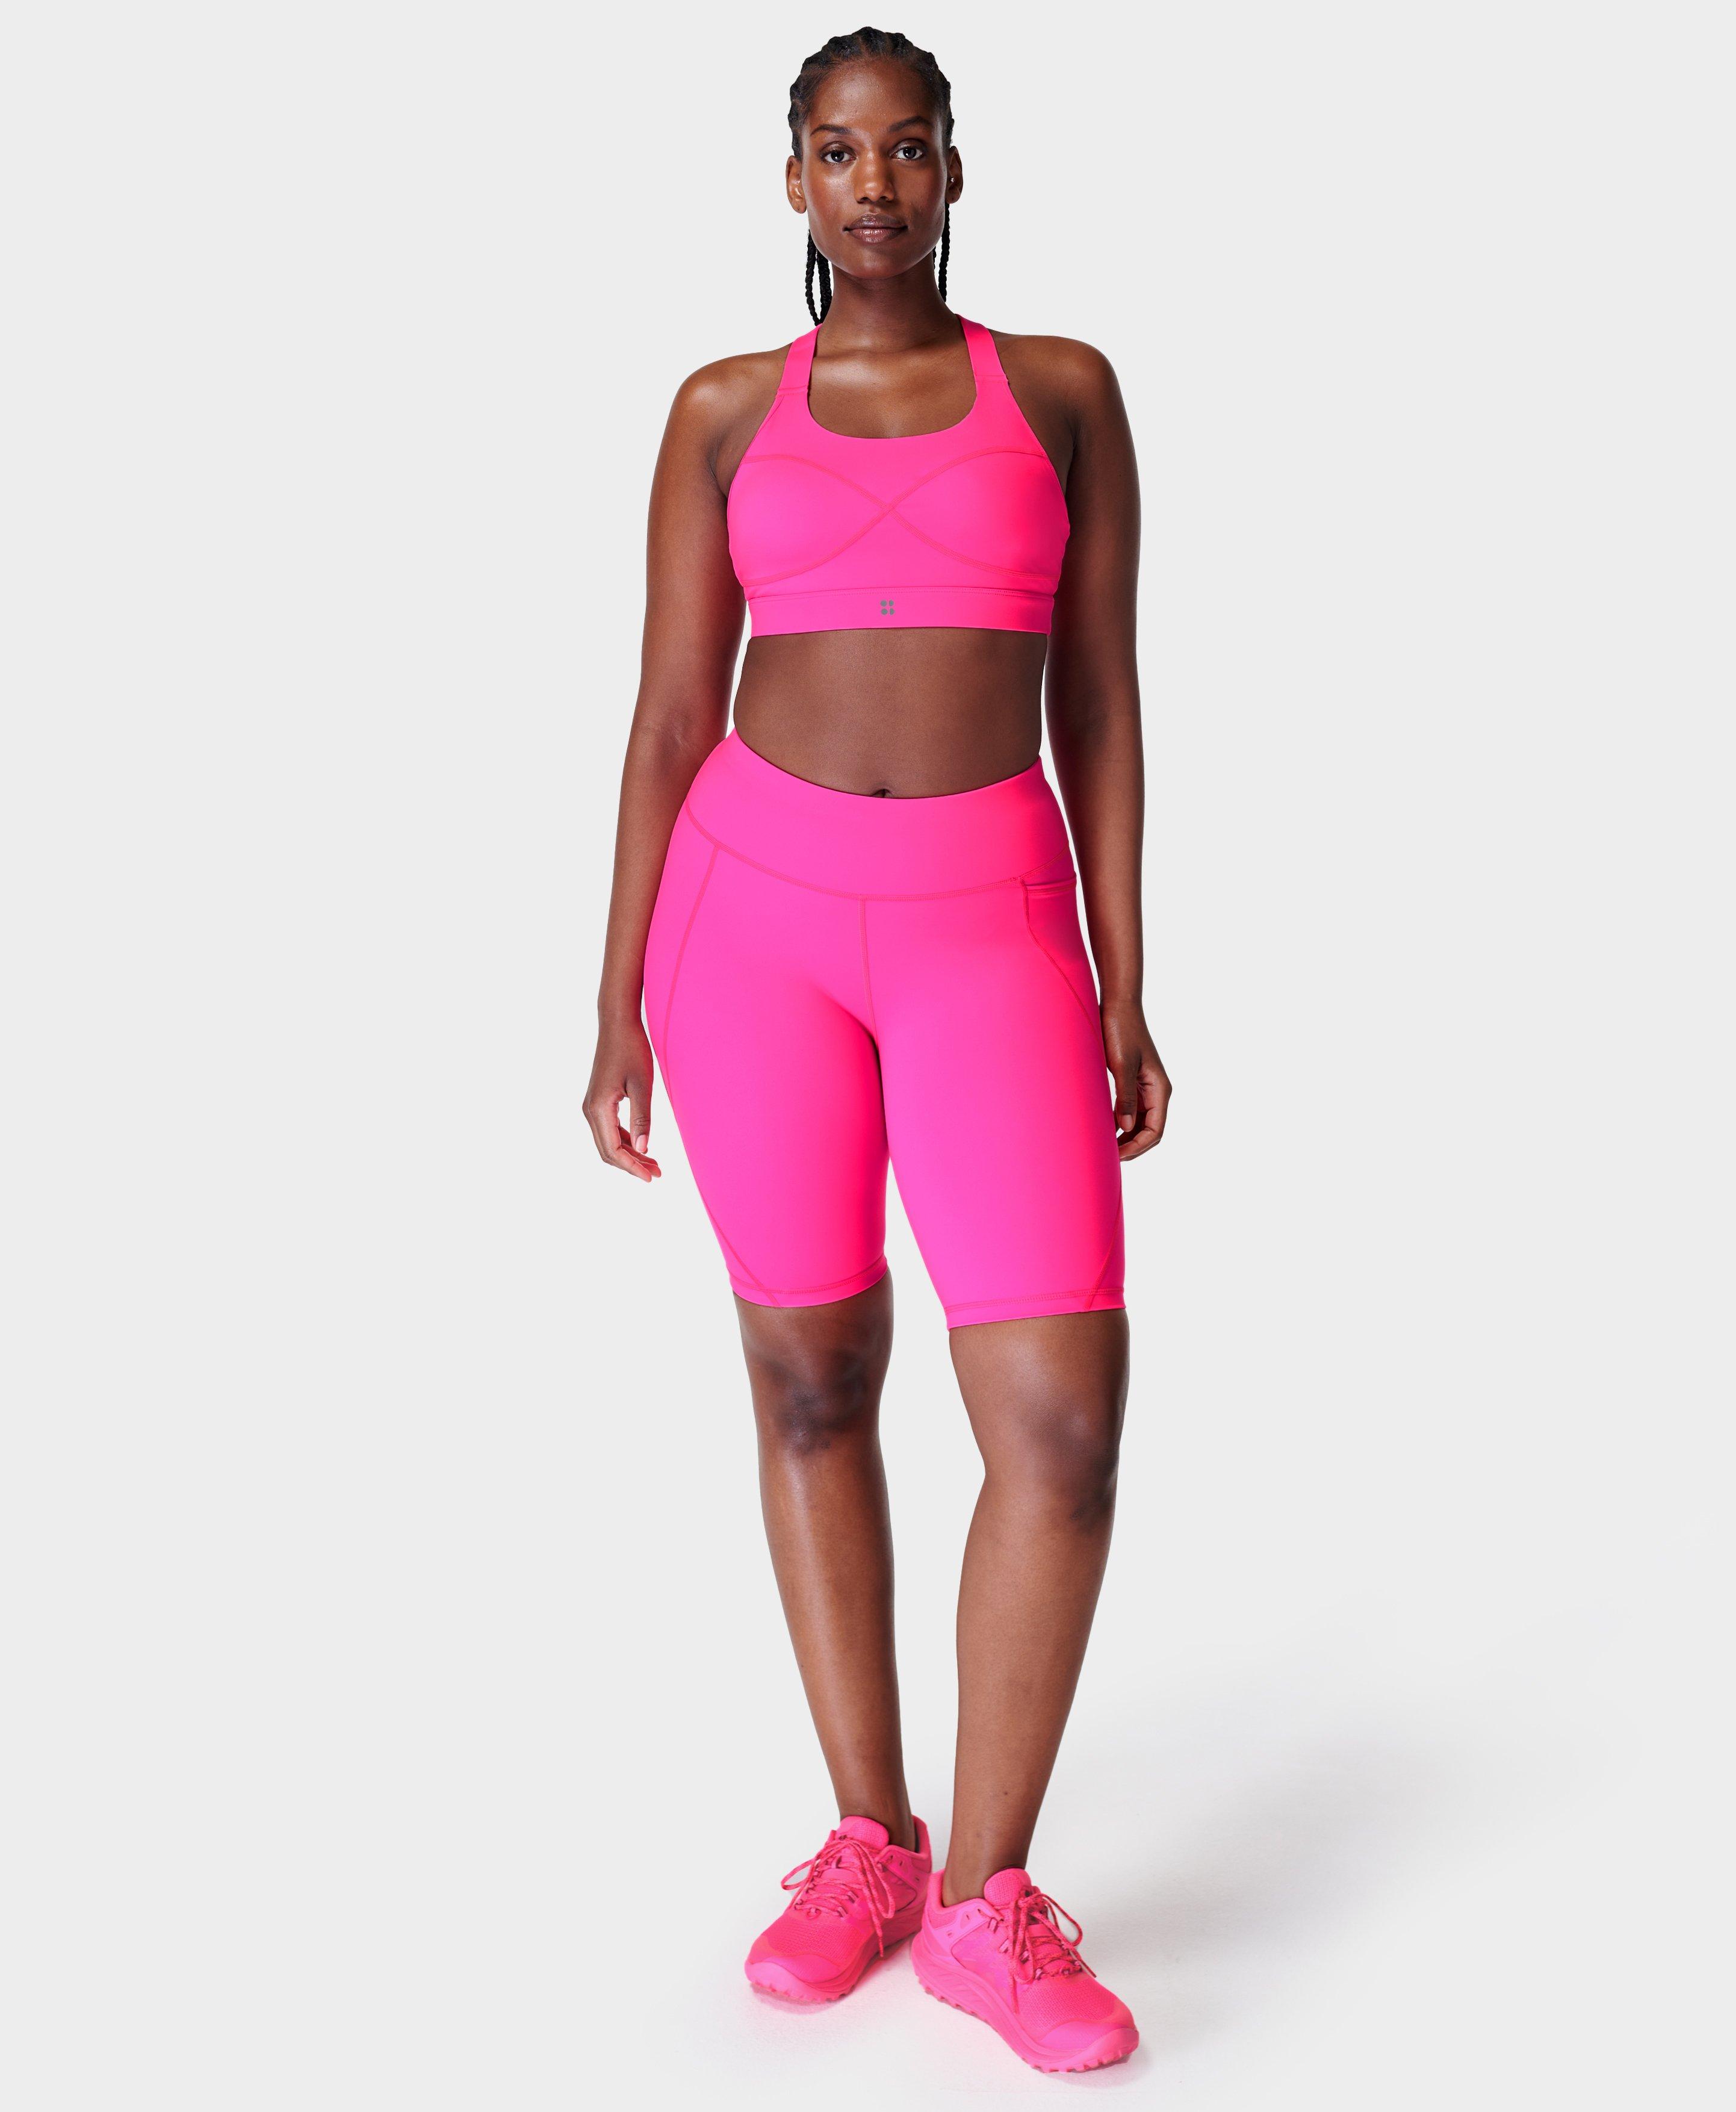 Women's - Sport Bras in Pink for Training